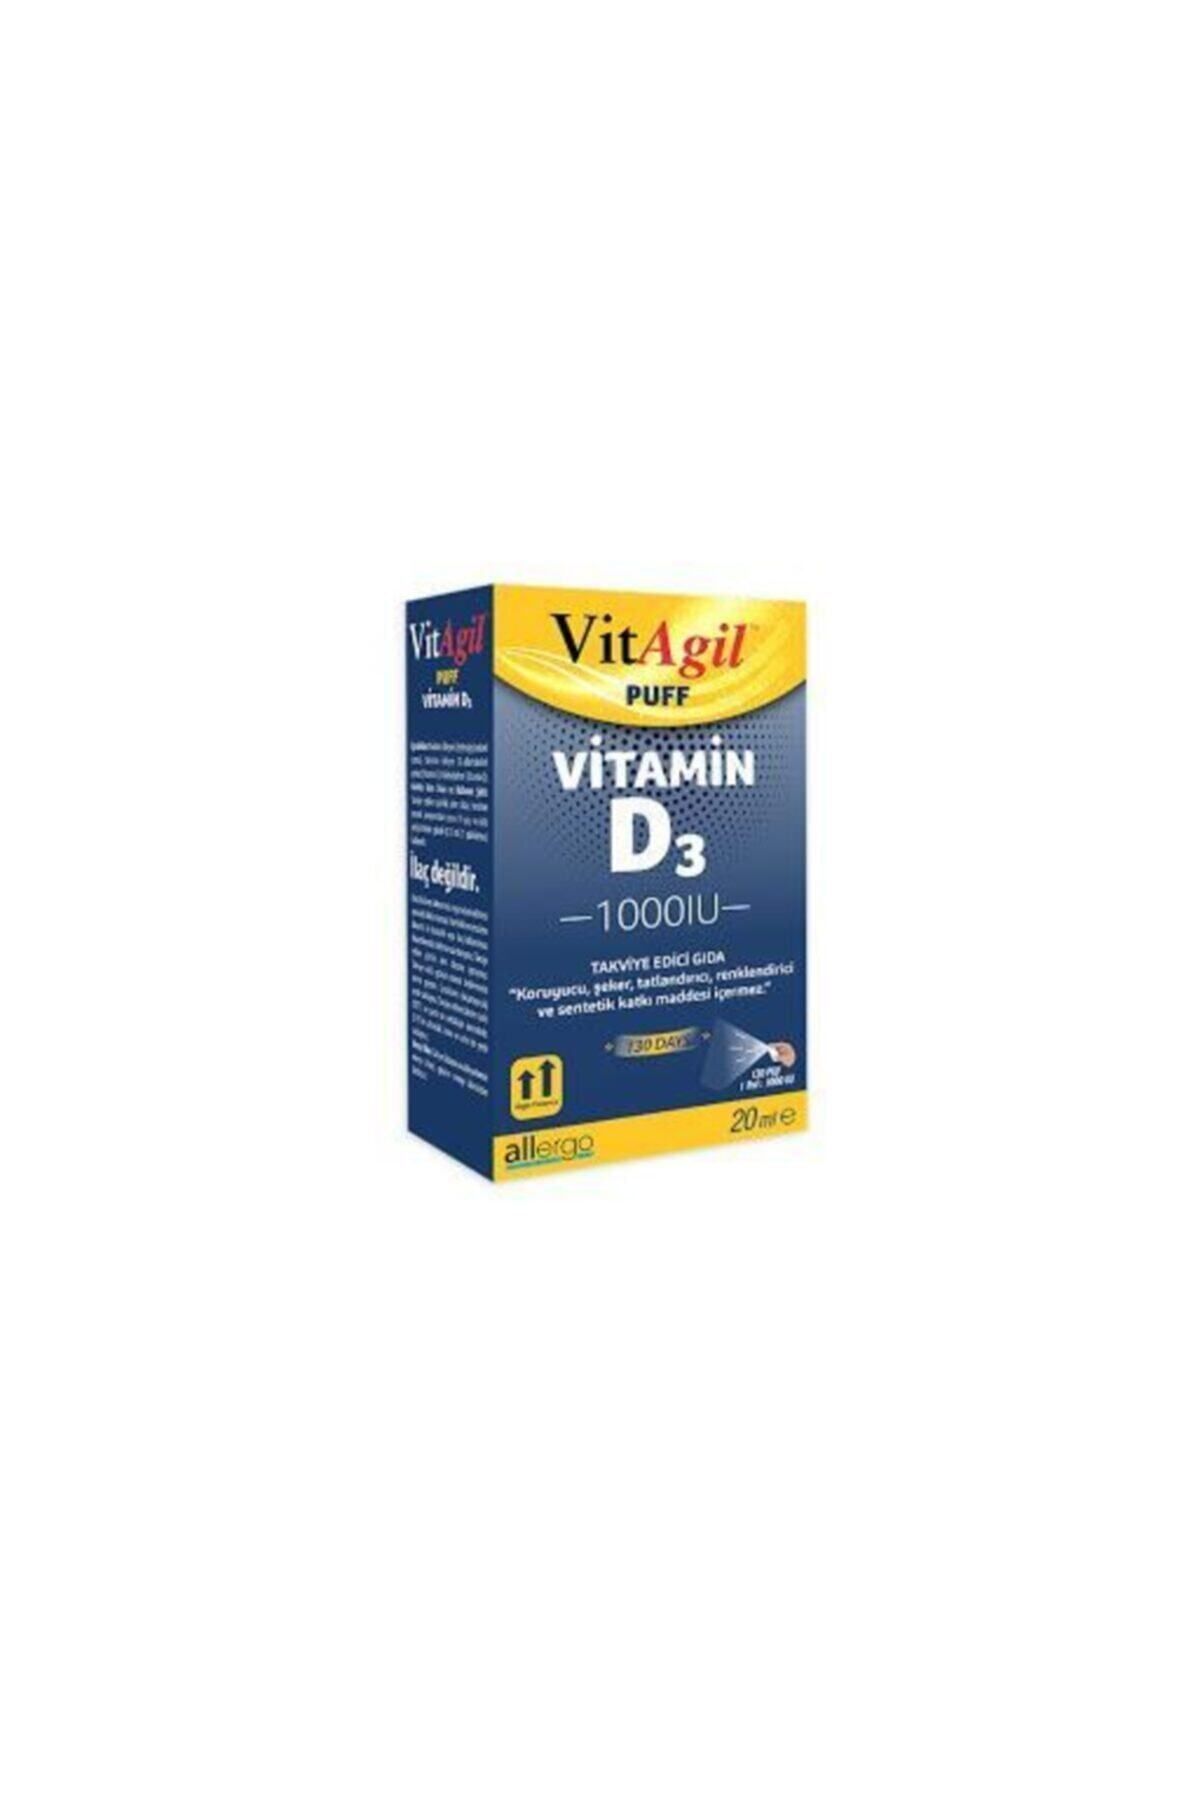 Allergo Vitagil Puff Vitamin D3 1000 Iu 20 Ml